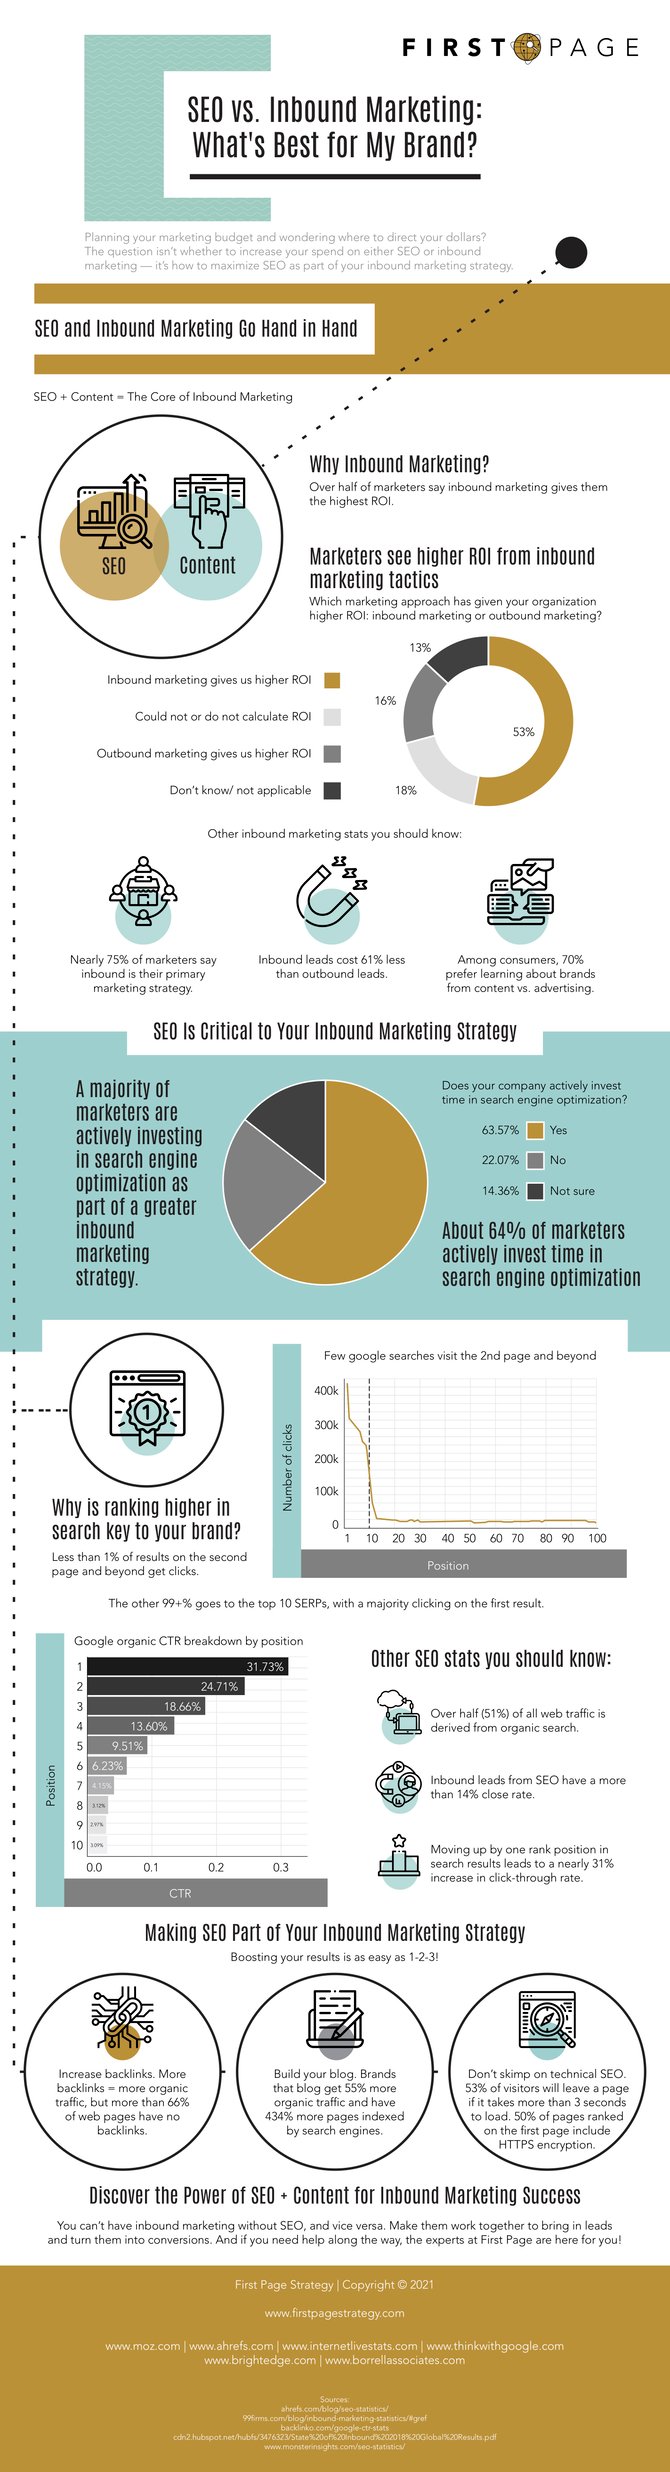 SEO vs Inbound Marketing infographic